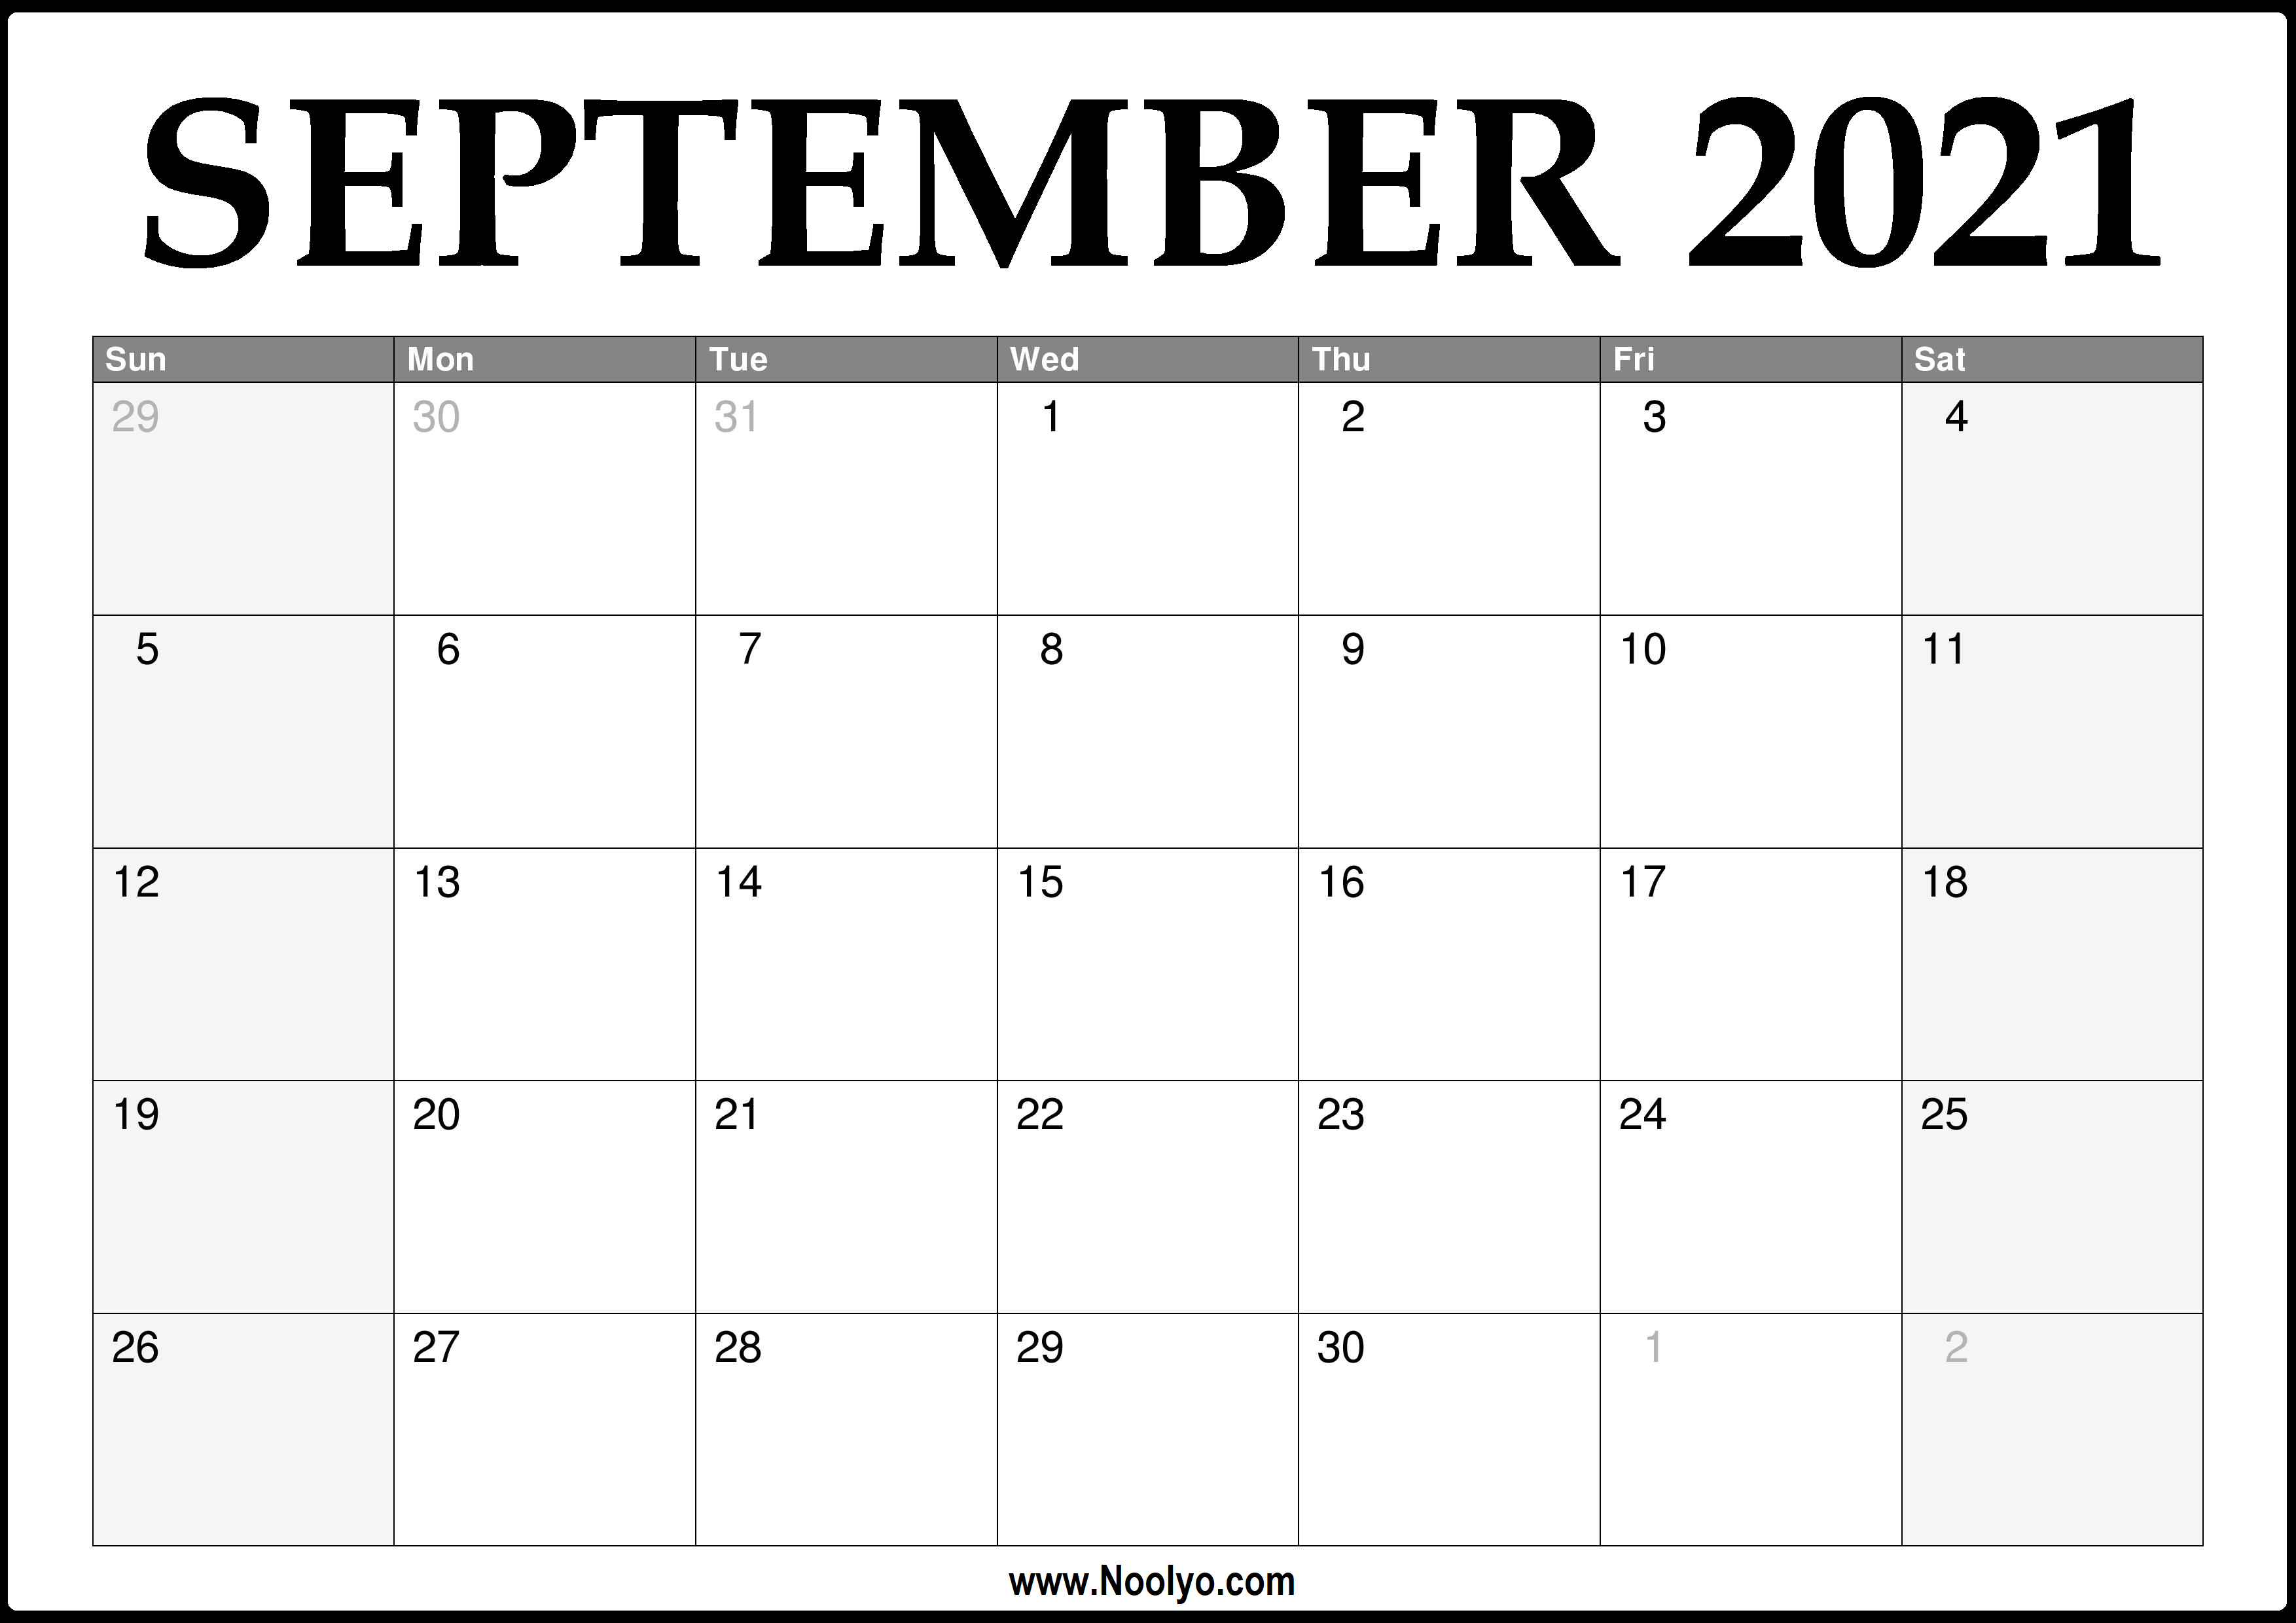 2021 September Calendar Printable - Download Free - Noolyo.com